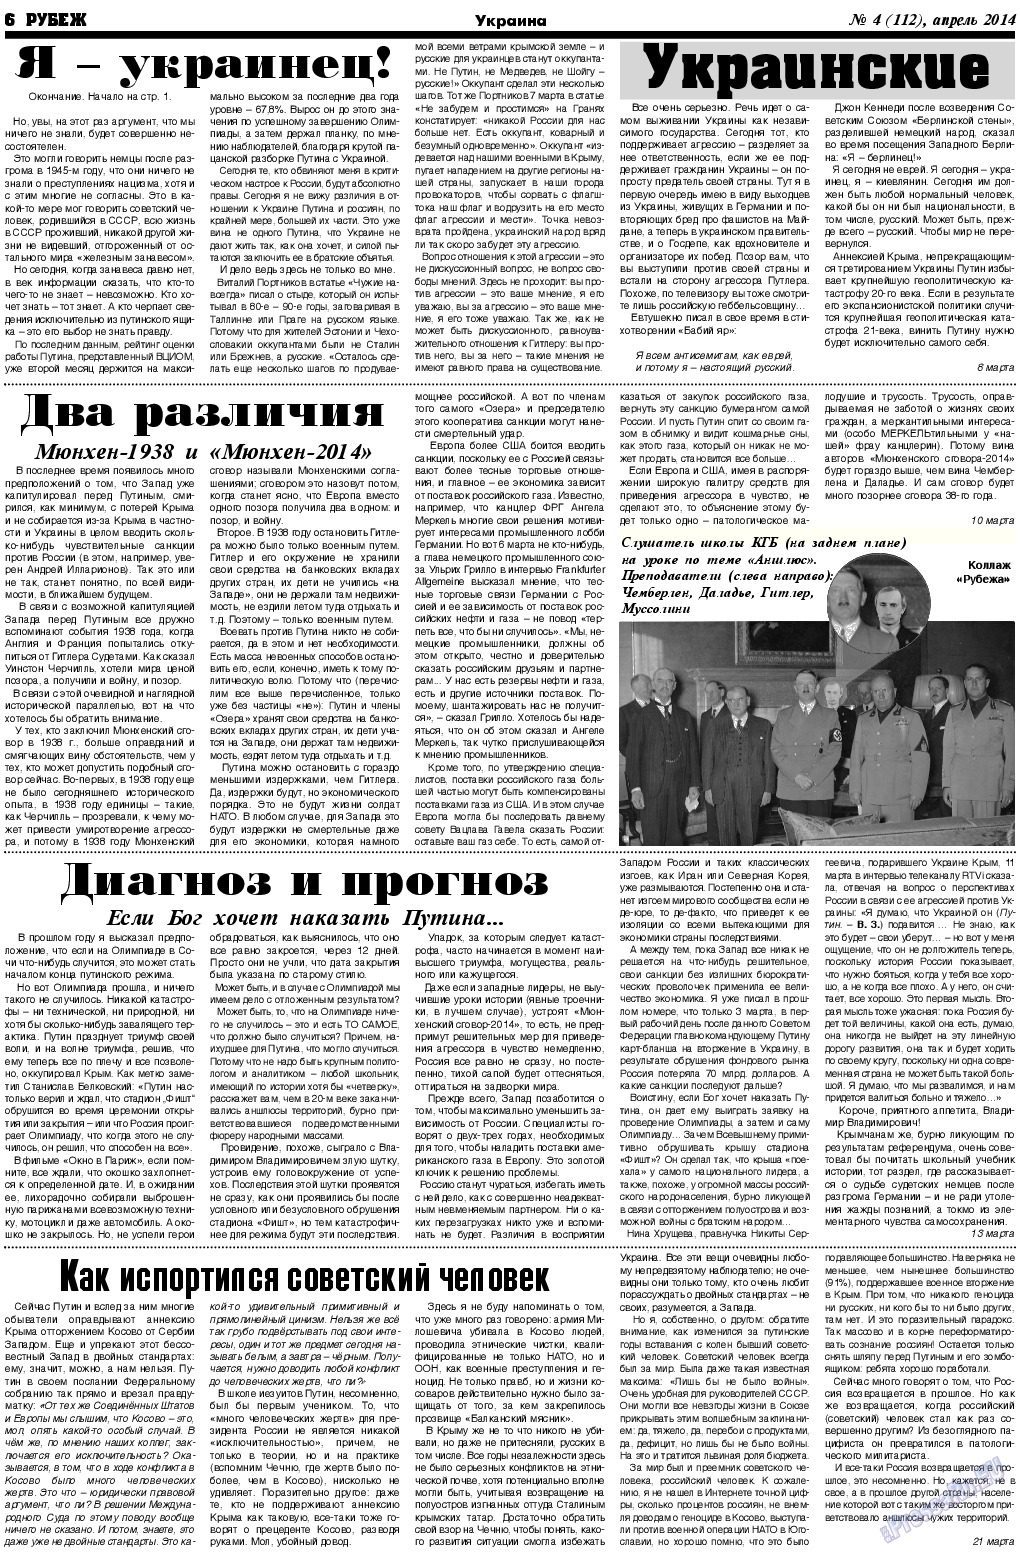 Рубеж, газета. 2014 №4 стр.6